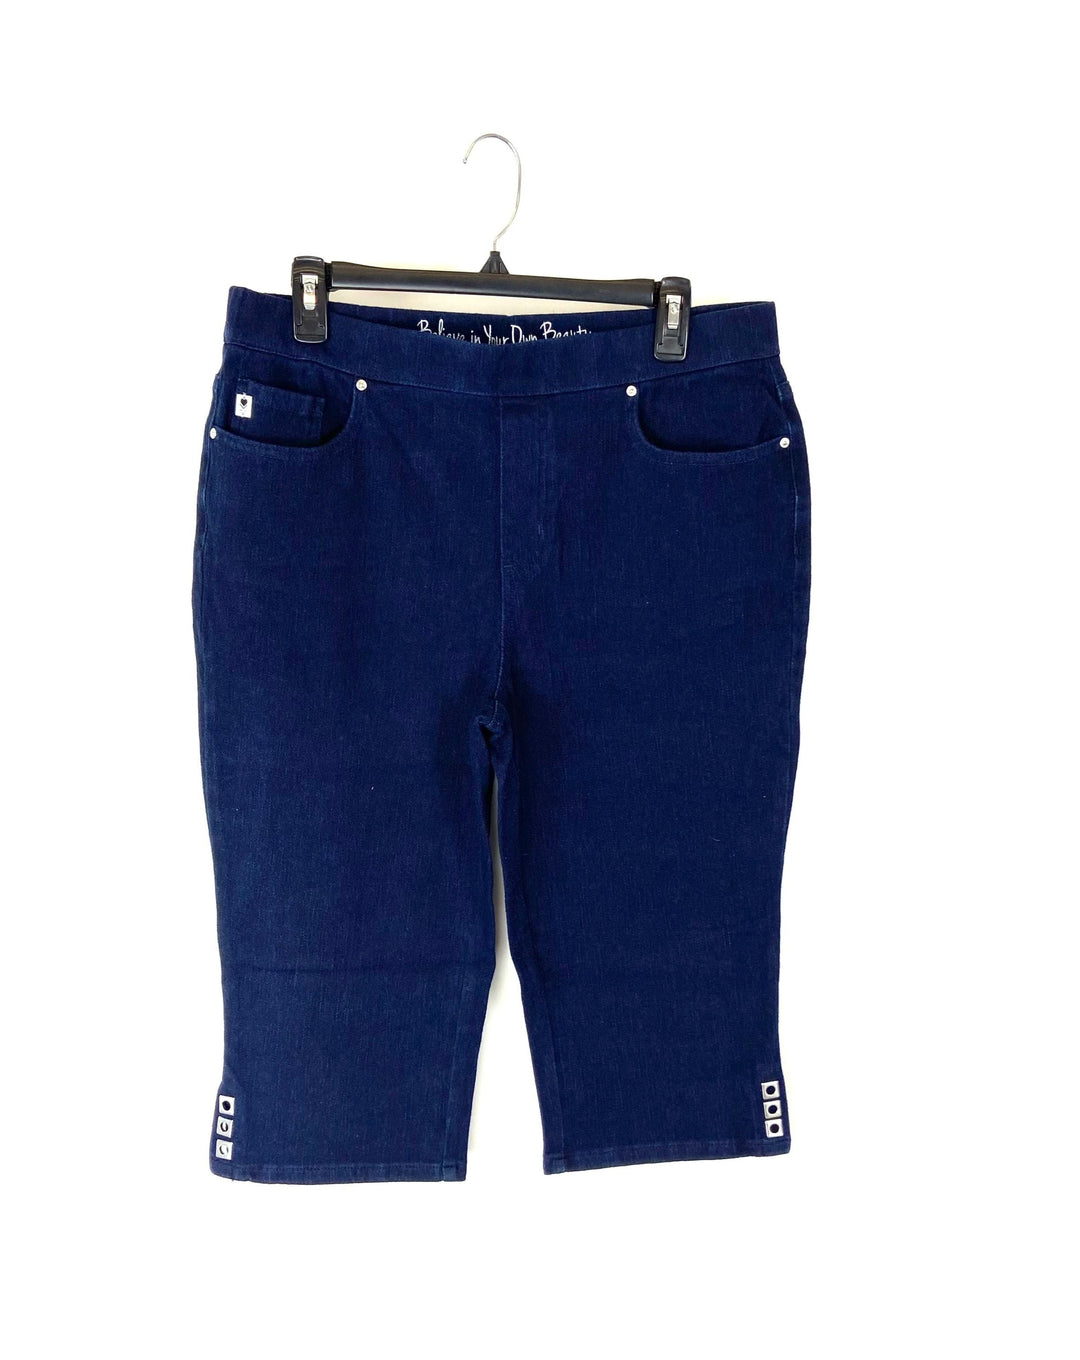 Dark Wash Capri Jeans - Size 6/8, 12/14